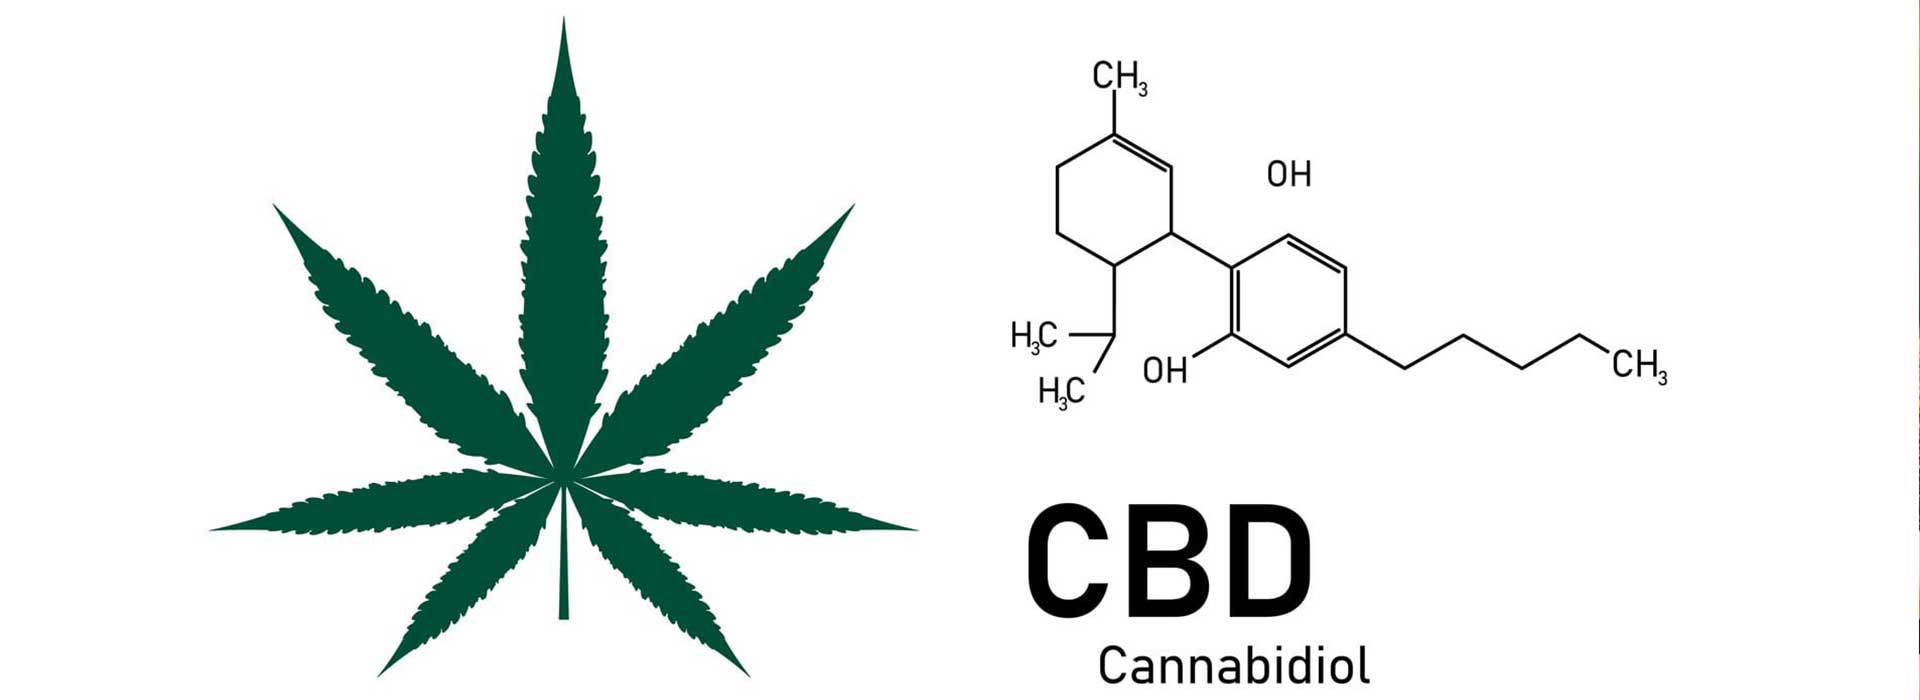 CBD Compound and Cannabis leaf